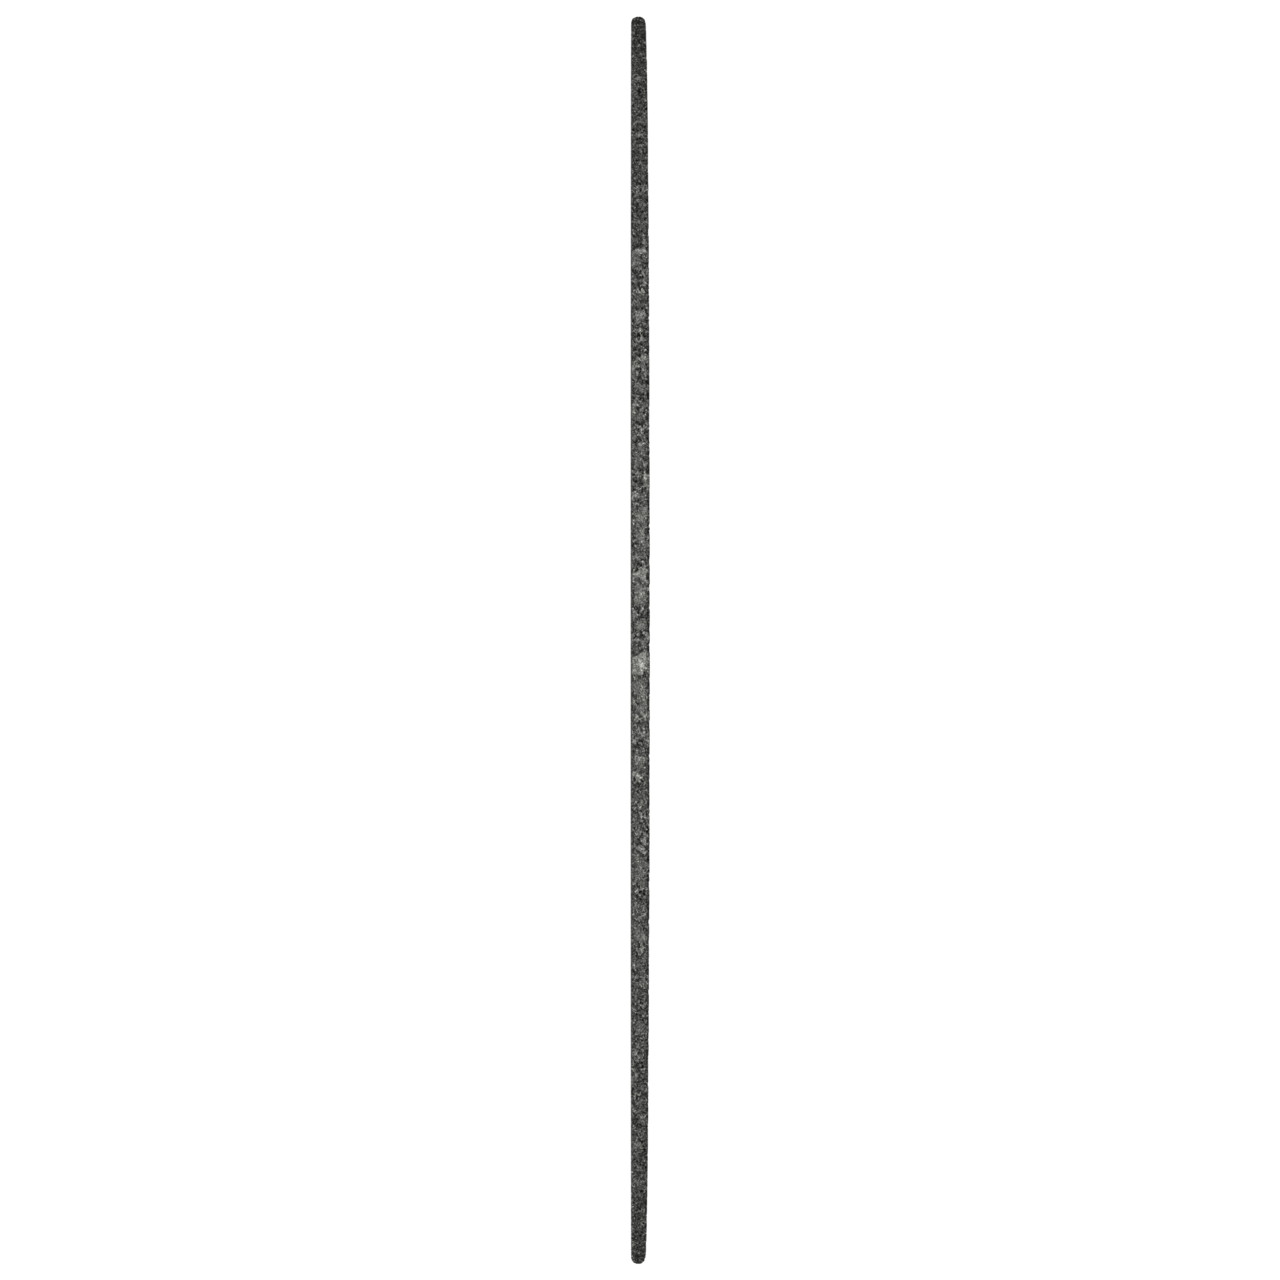 Dischi da taglio Tyrolit DxDxH 75x1x8 Per acciaio inox, forma: 41 - versione diritta, Art. 325228